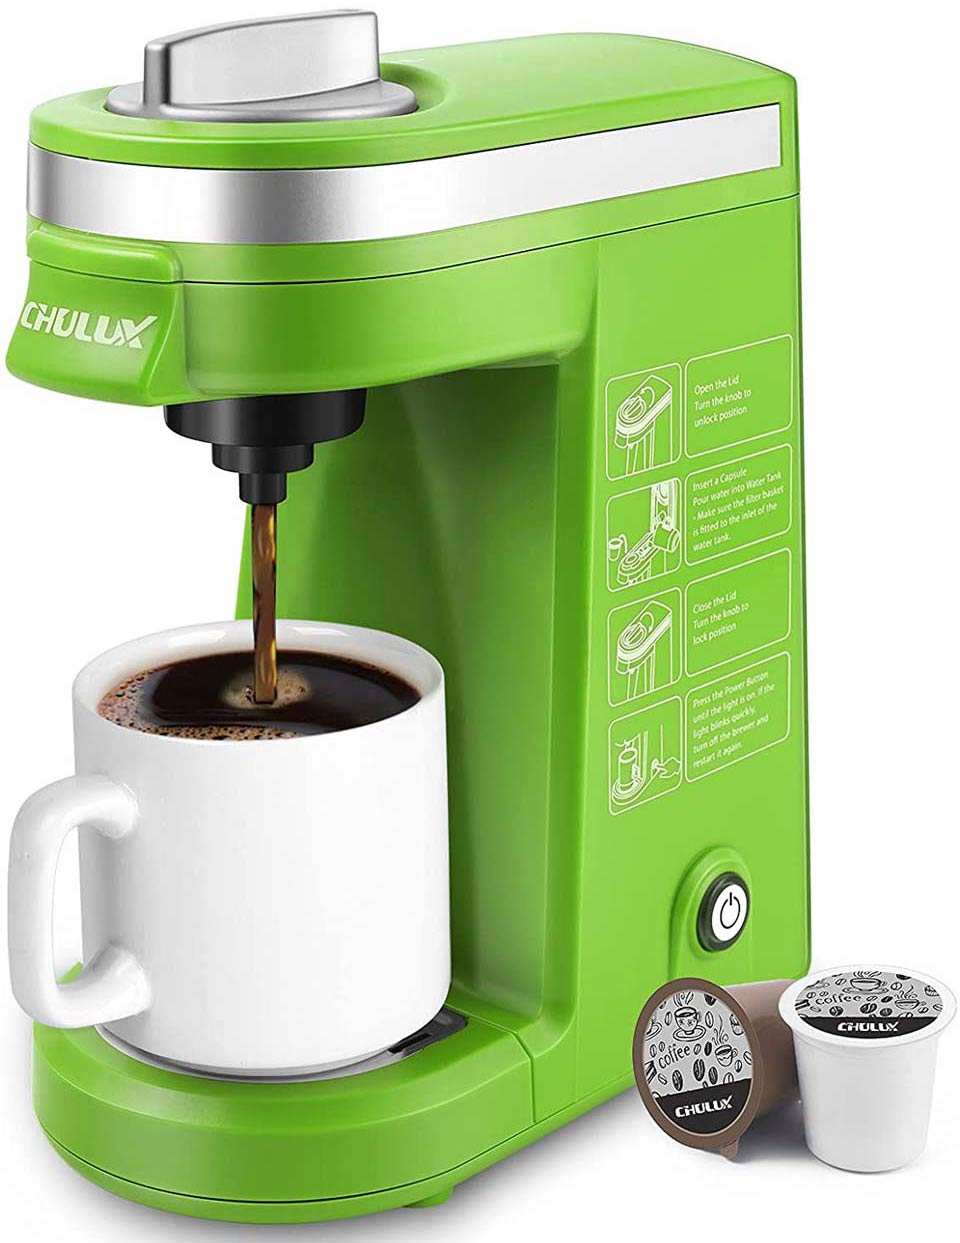 CHULUX Single Cup Coffee Maker